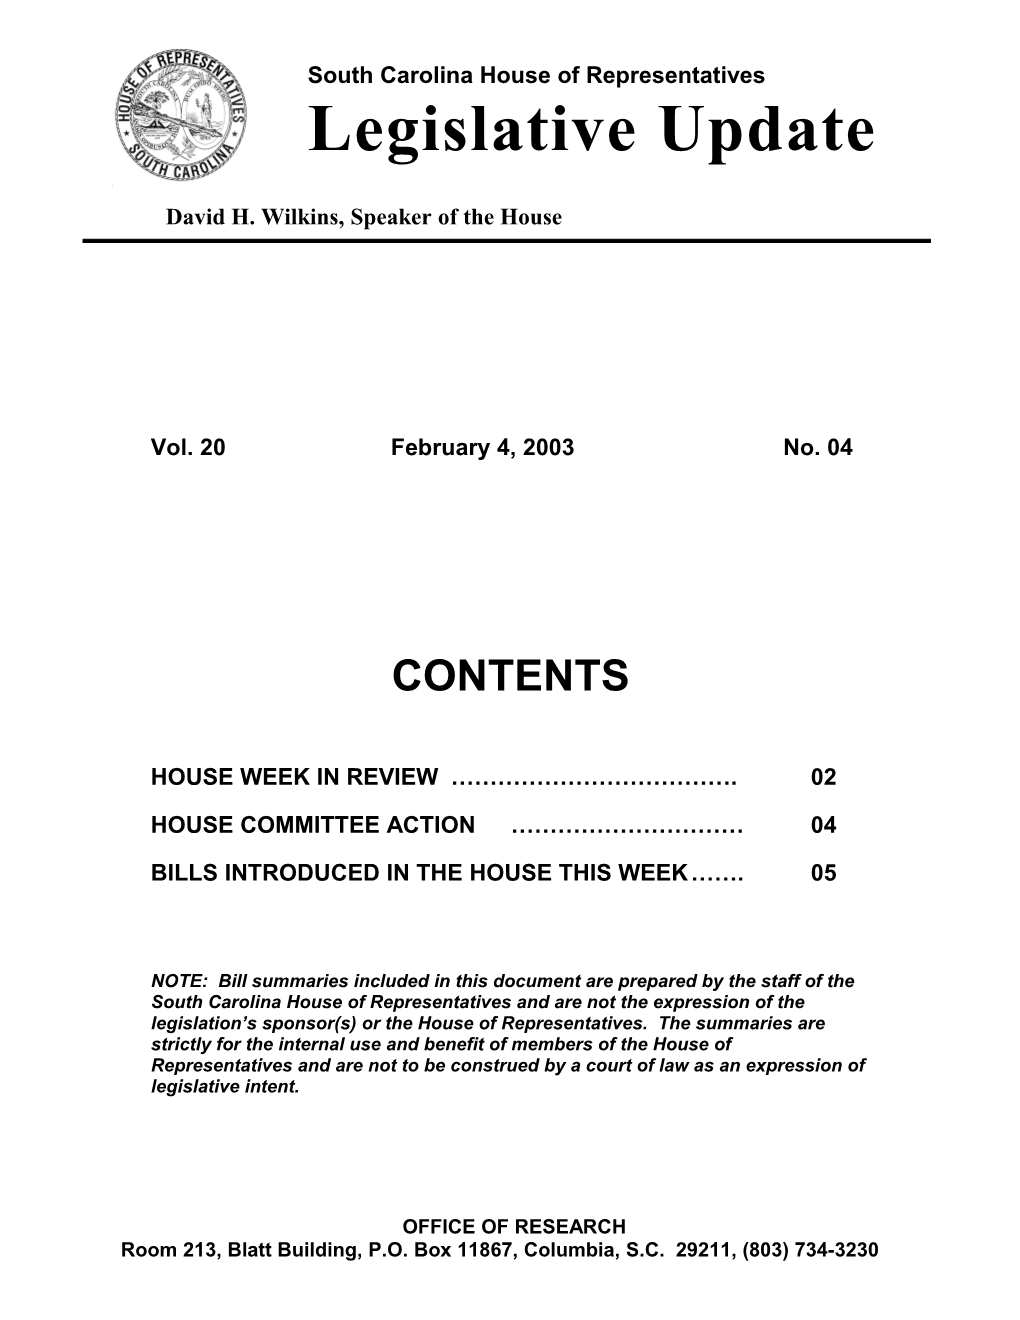 Legislative Update - Vol. 20 No. 04 February 4, 2003 - South Carolina Legislature Online